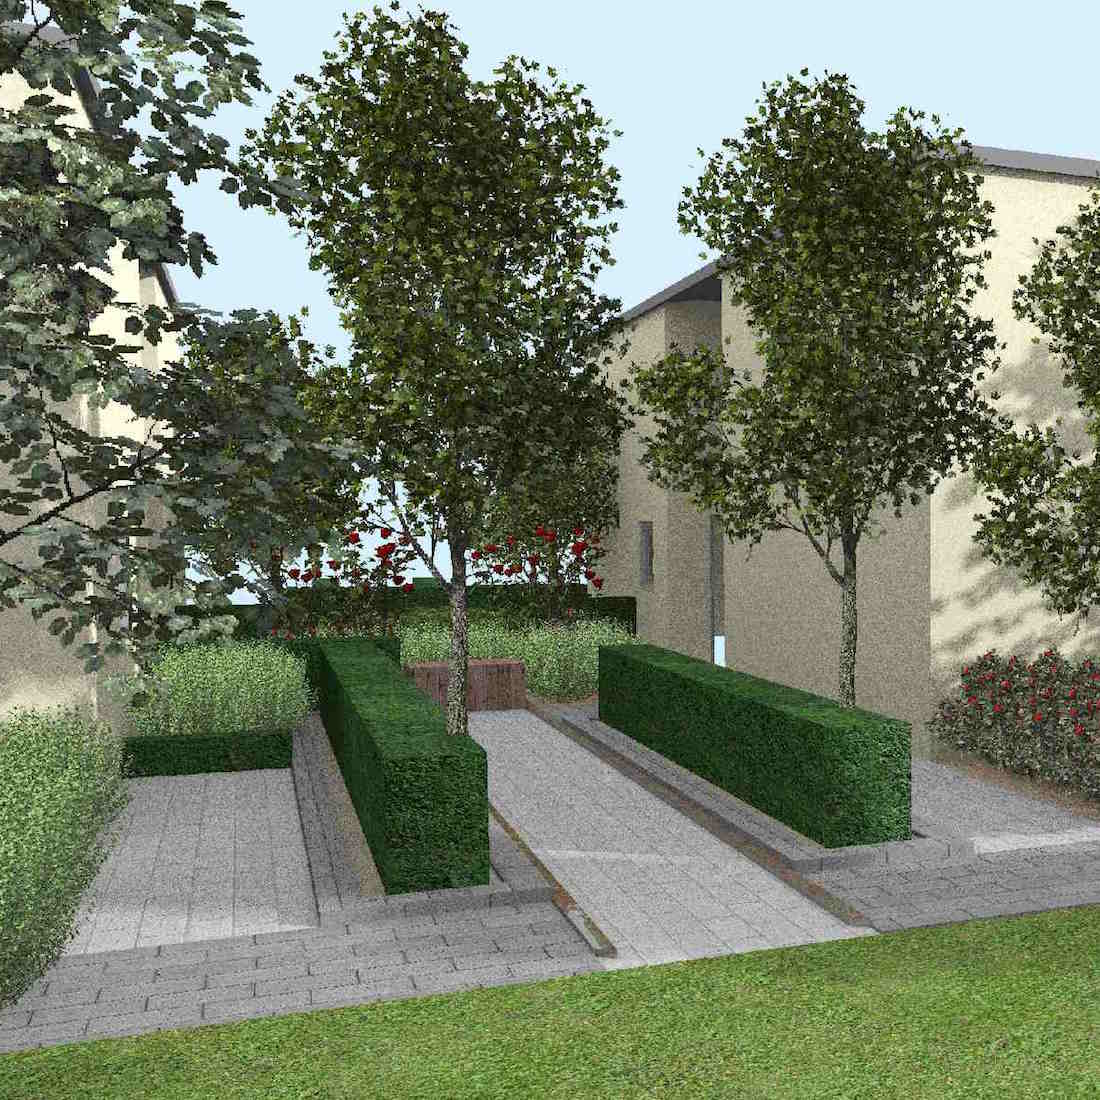 Station Yard Impington, Landscape Proposal